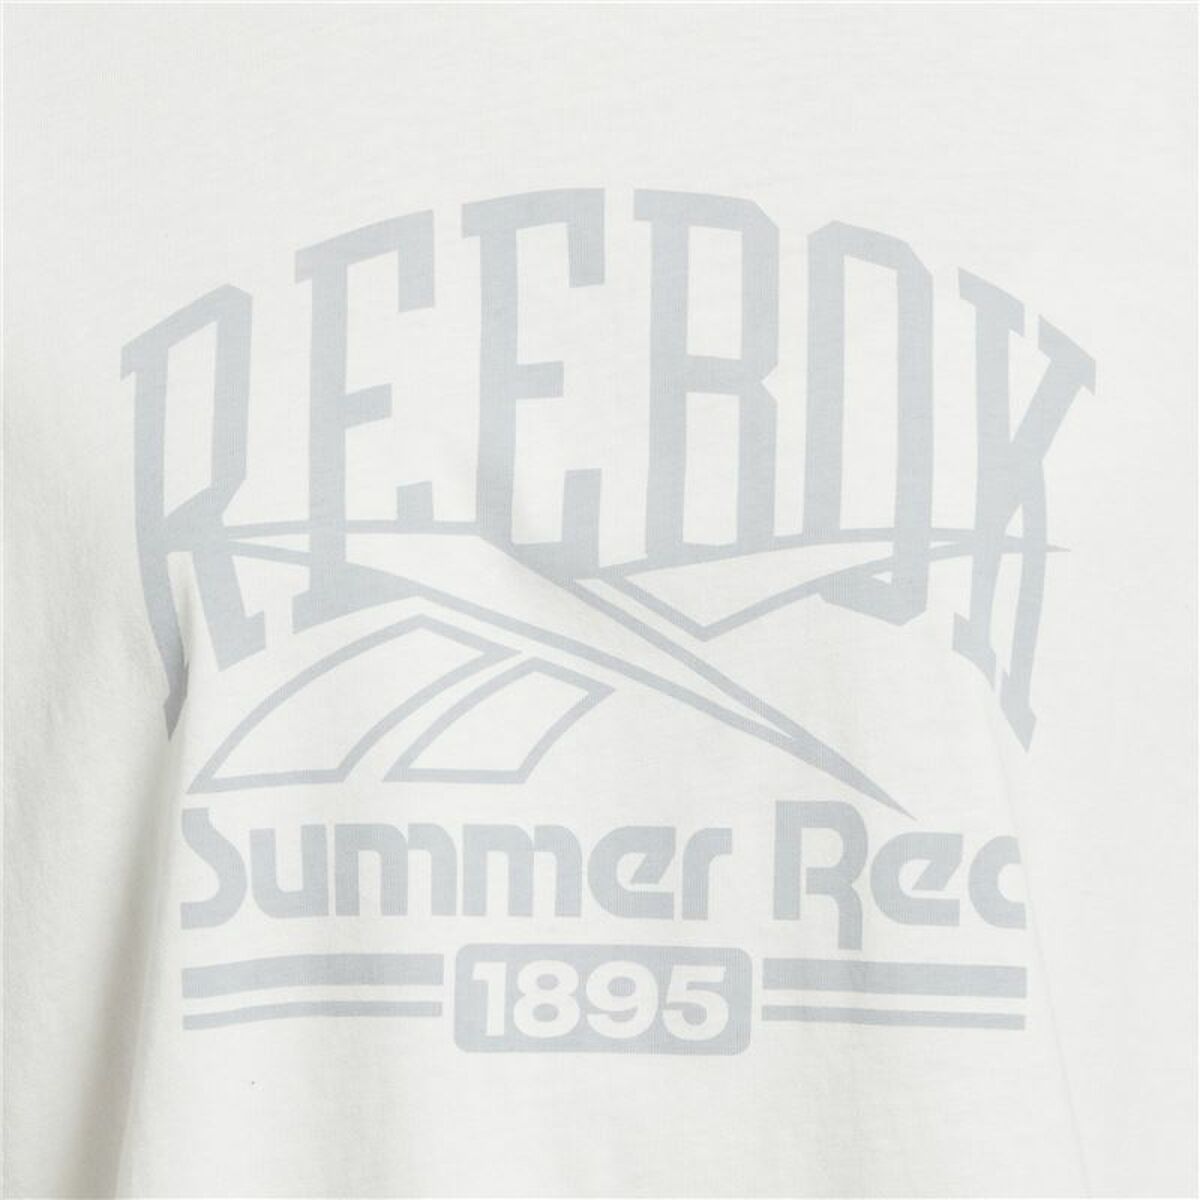 Women’s Short Sleeve T-Shirt Reebok Graphic Logo White